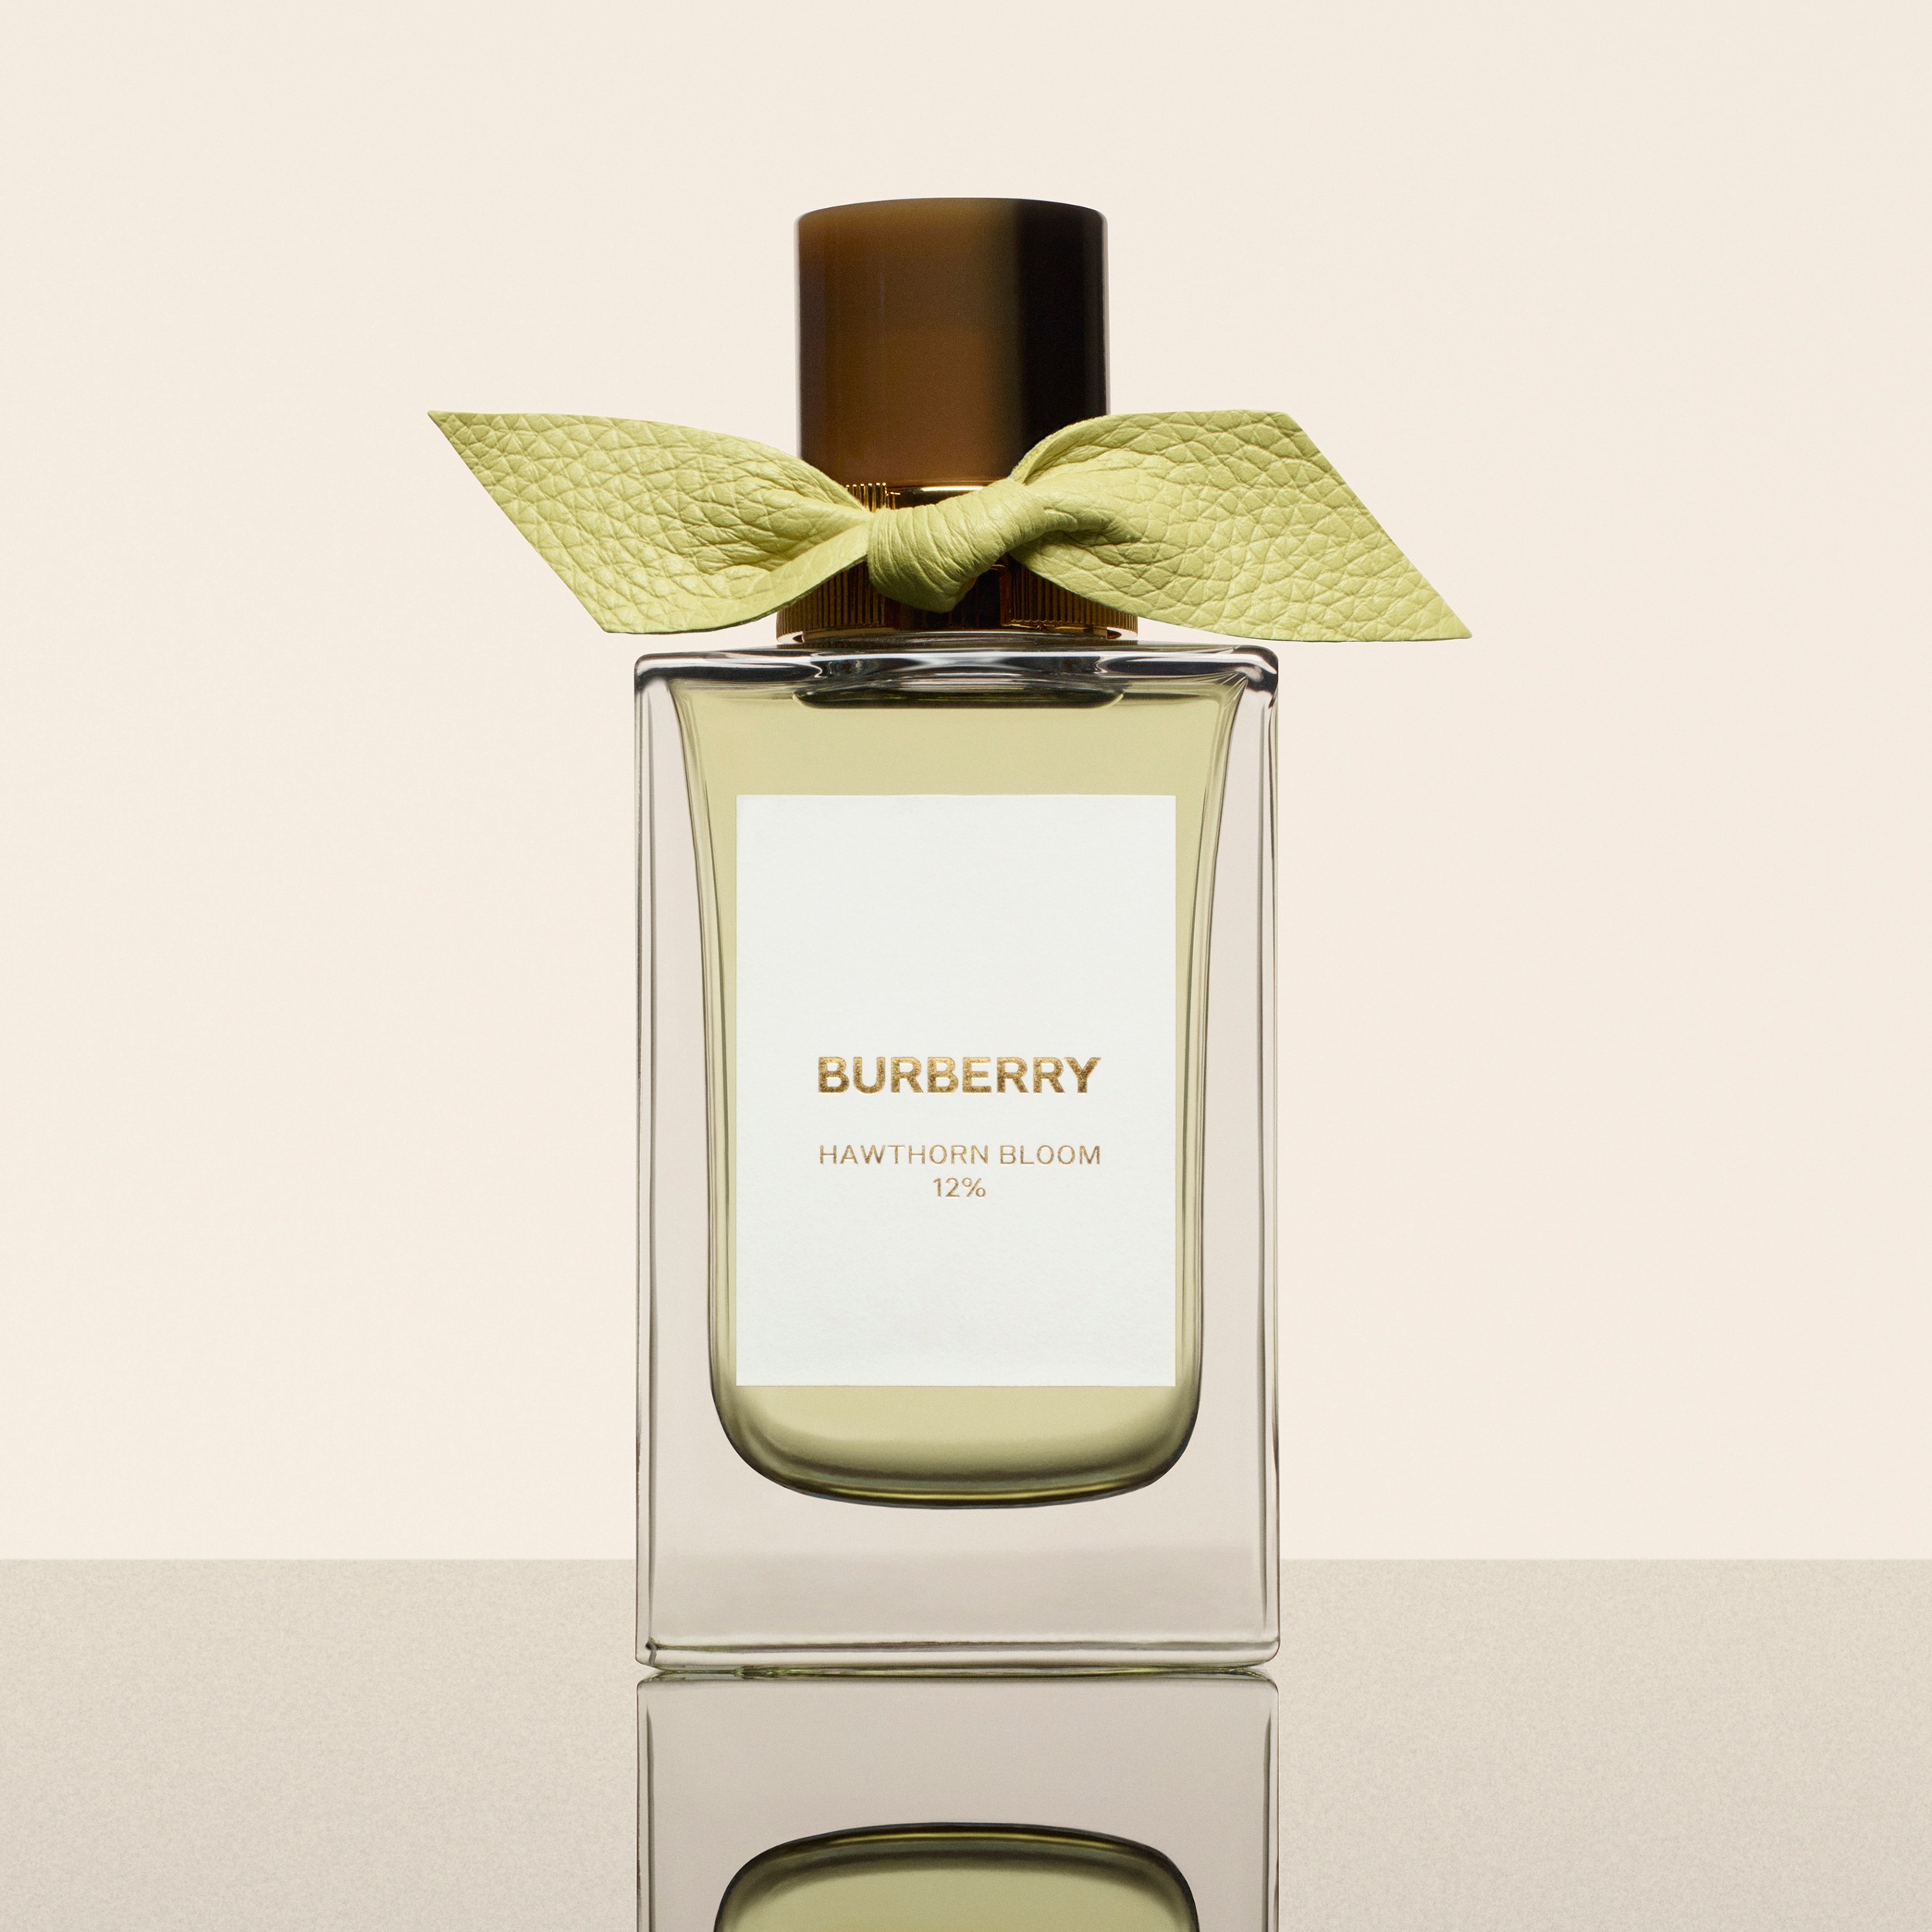 Burberry Signatures Eau de Parfum de 100 ml - Hawthorn Bloom | Burberry® oficial - 2